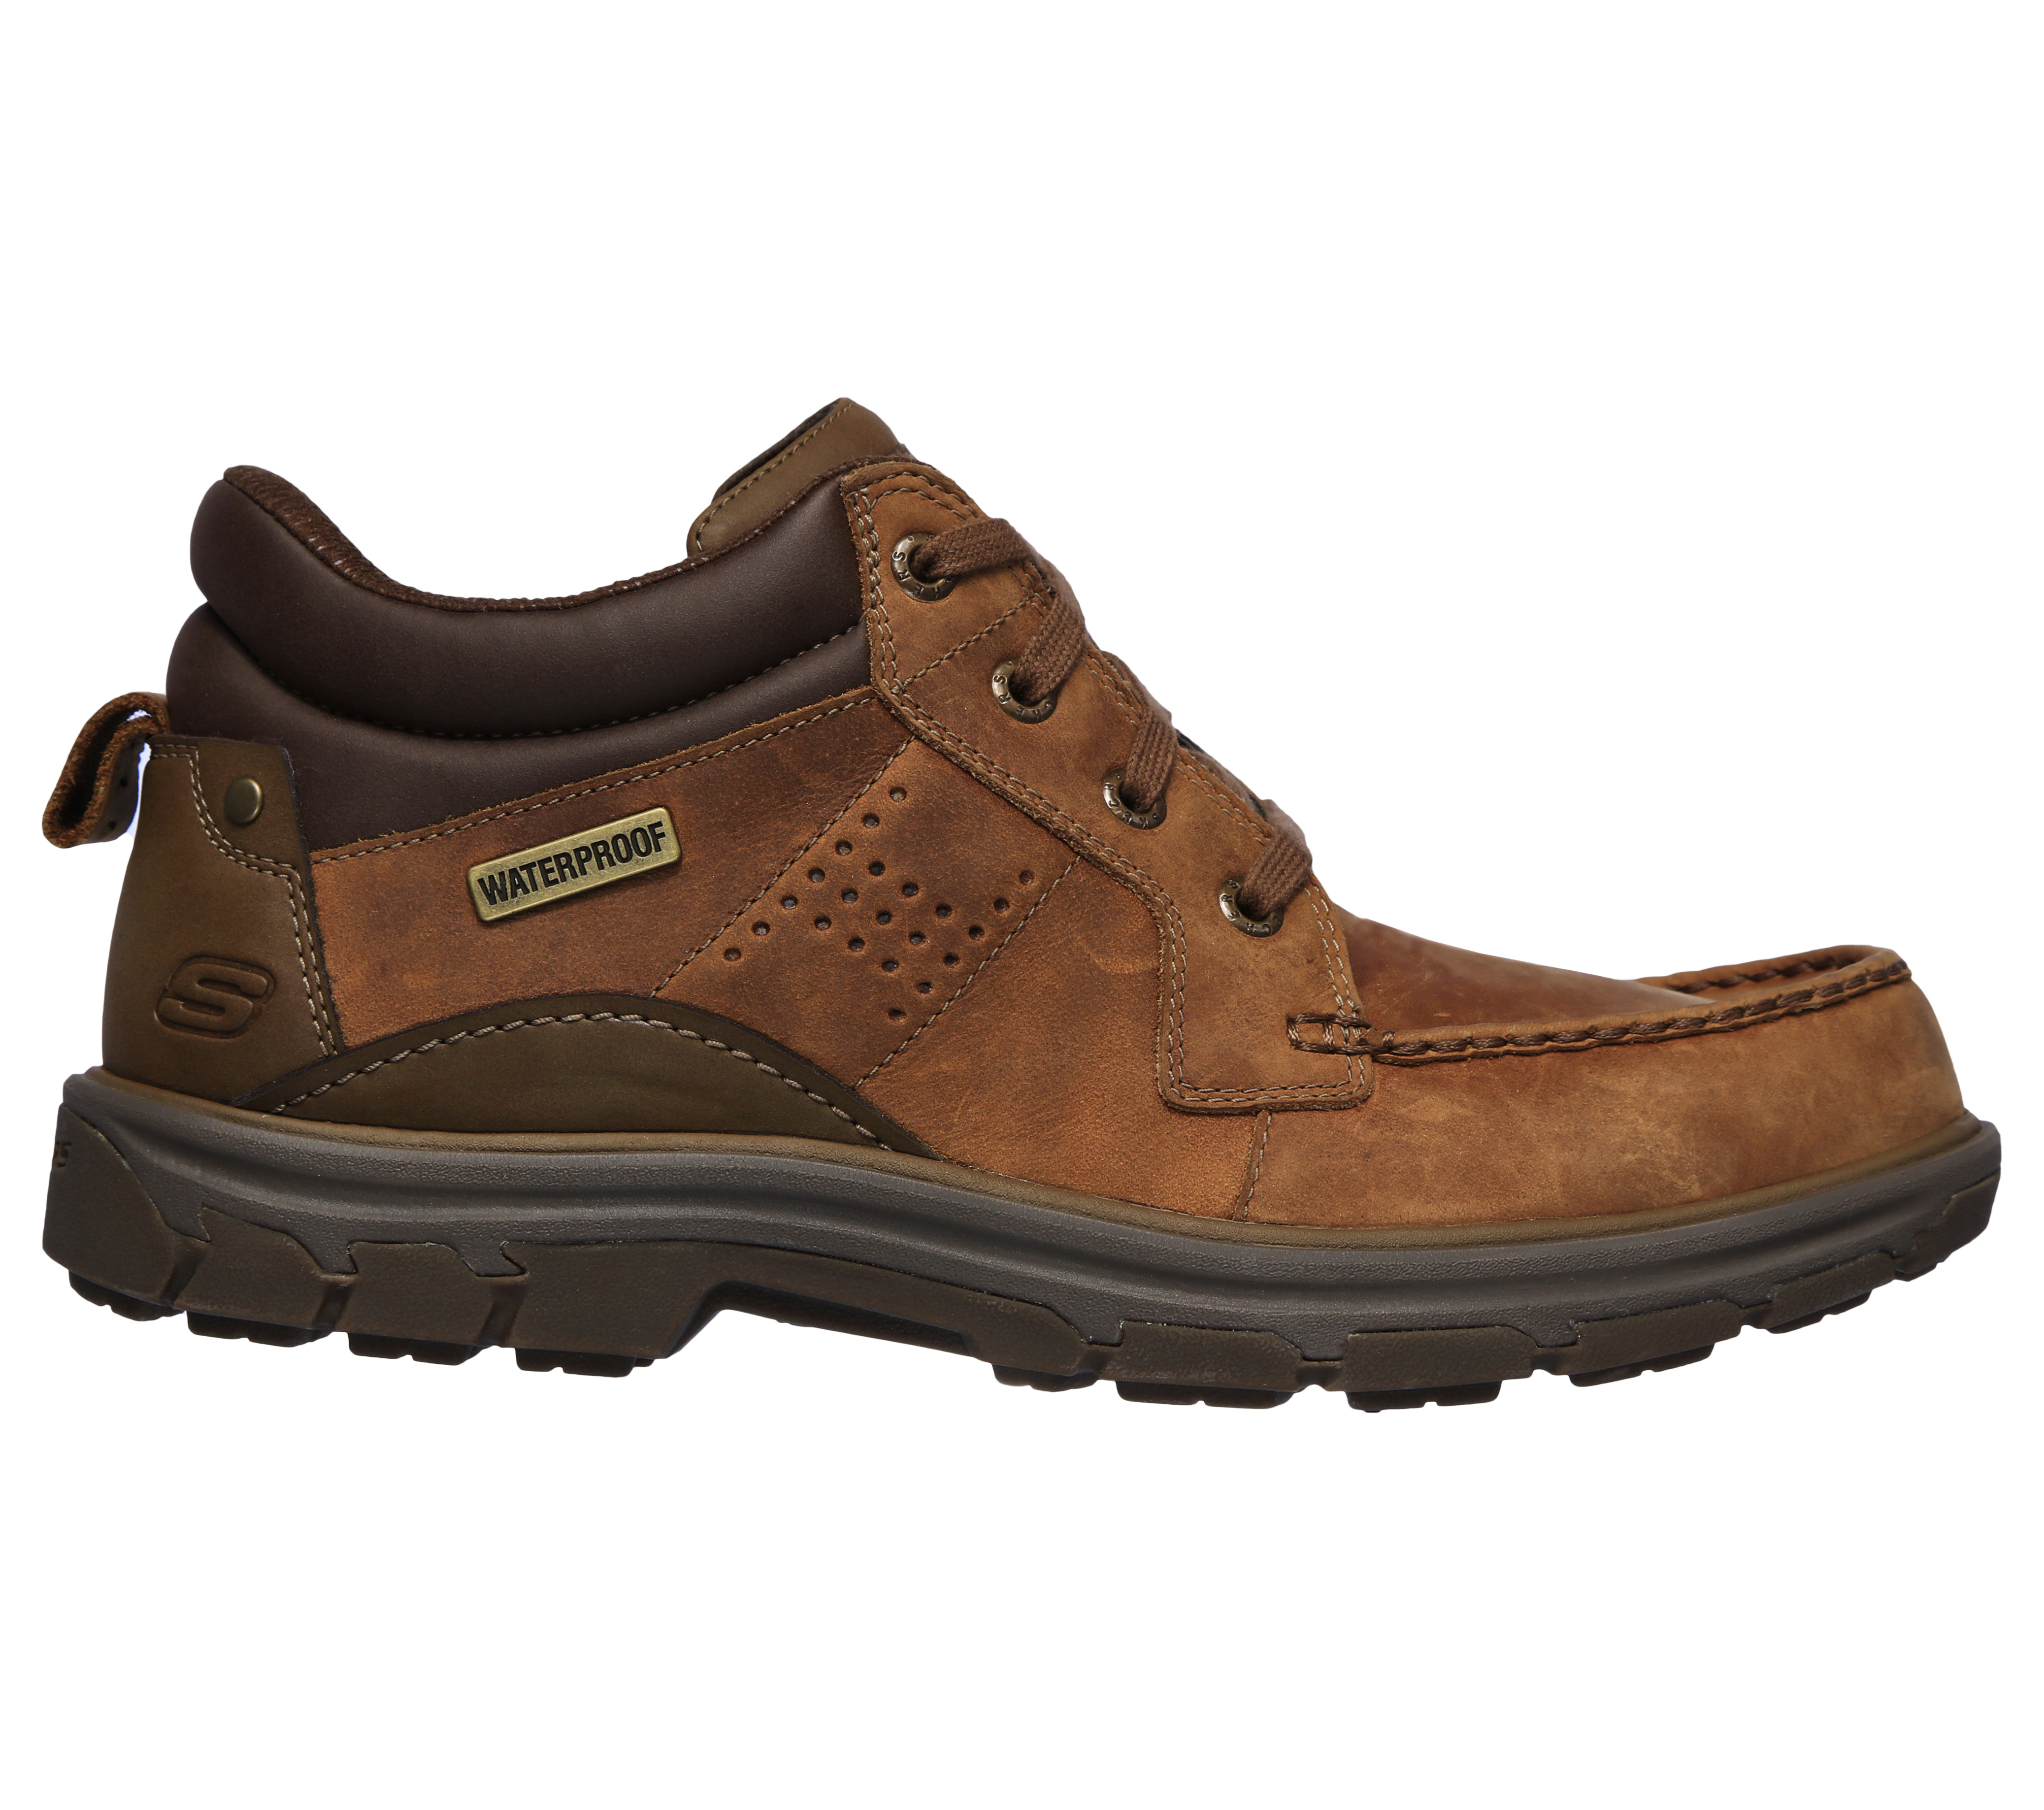 skechers men's segment melego leather chukka waterproof boot